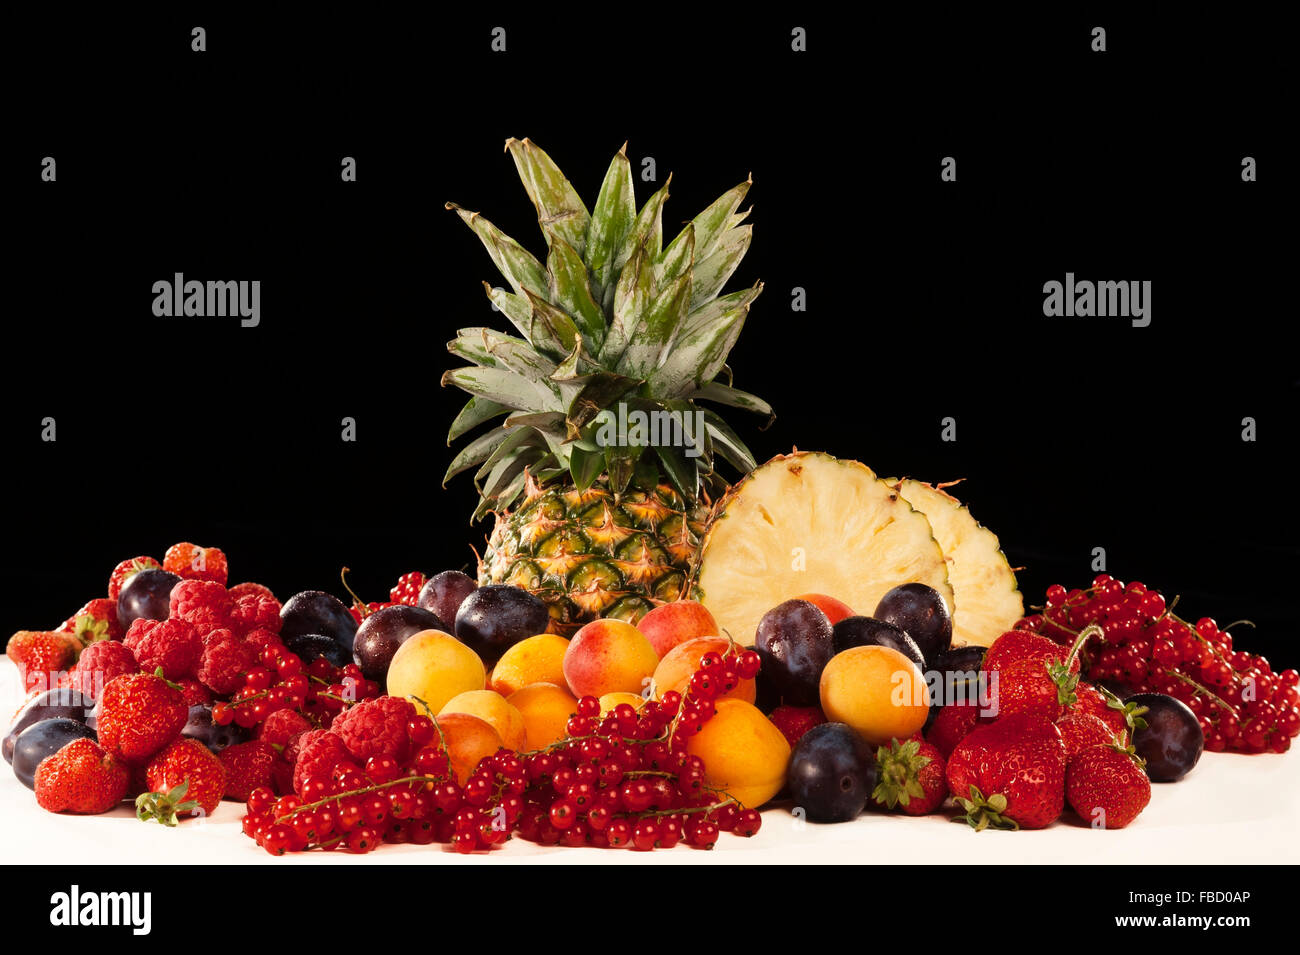 Fruit, still life, black background Stock Photo